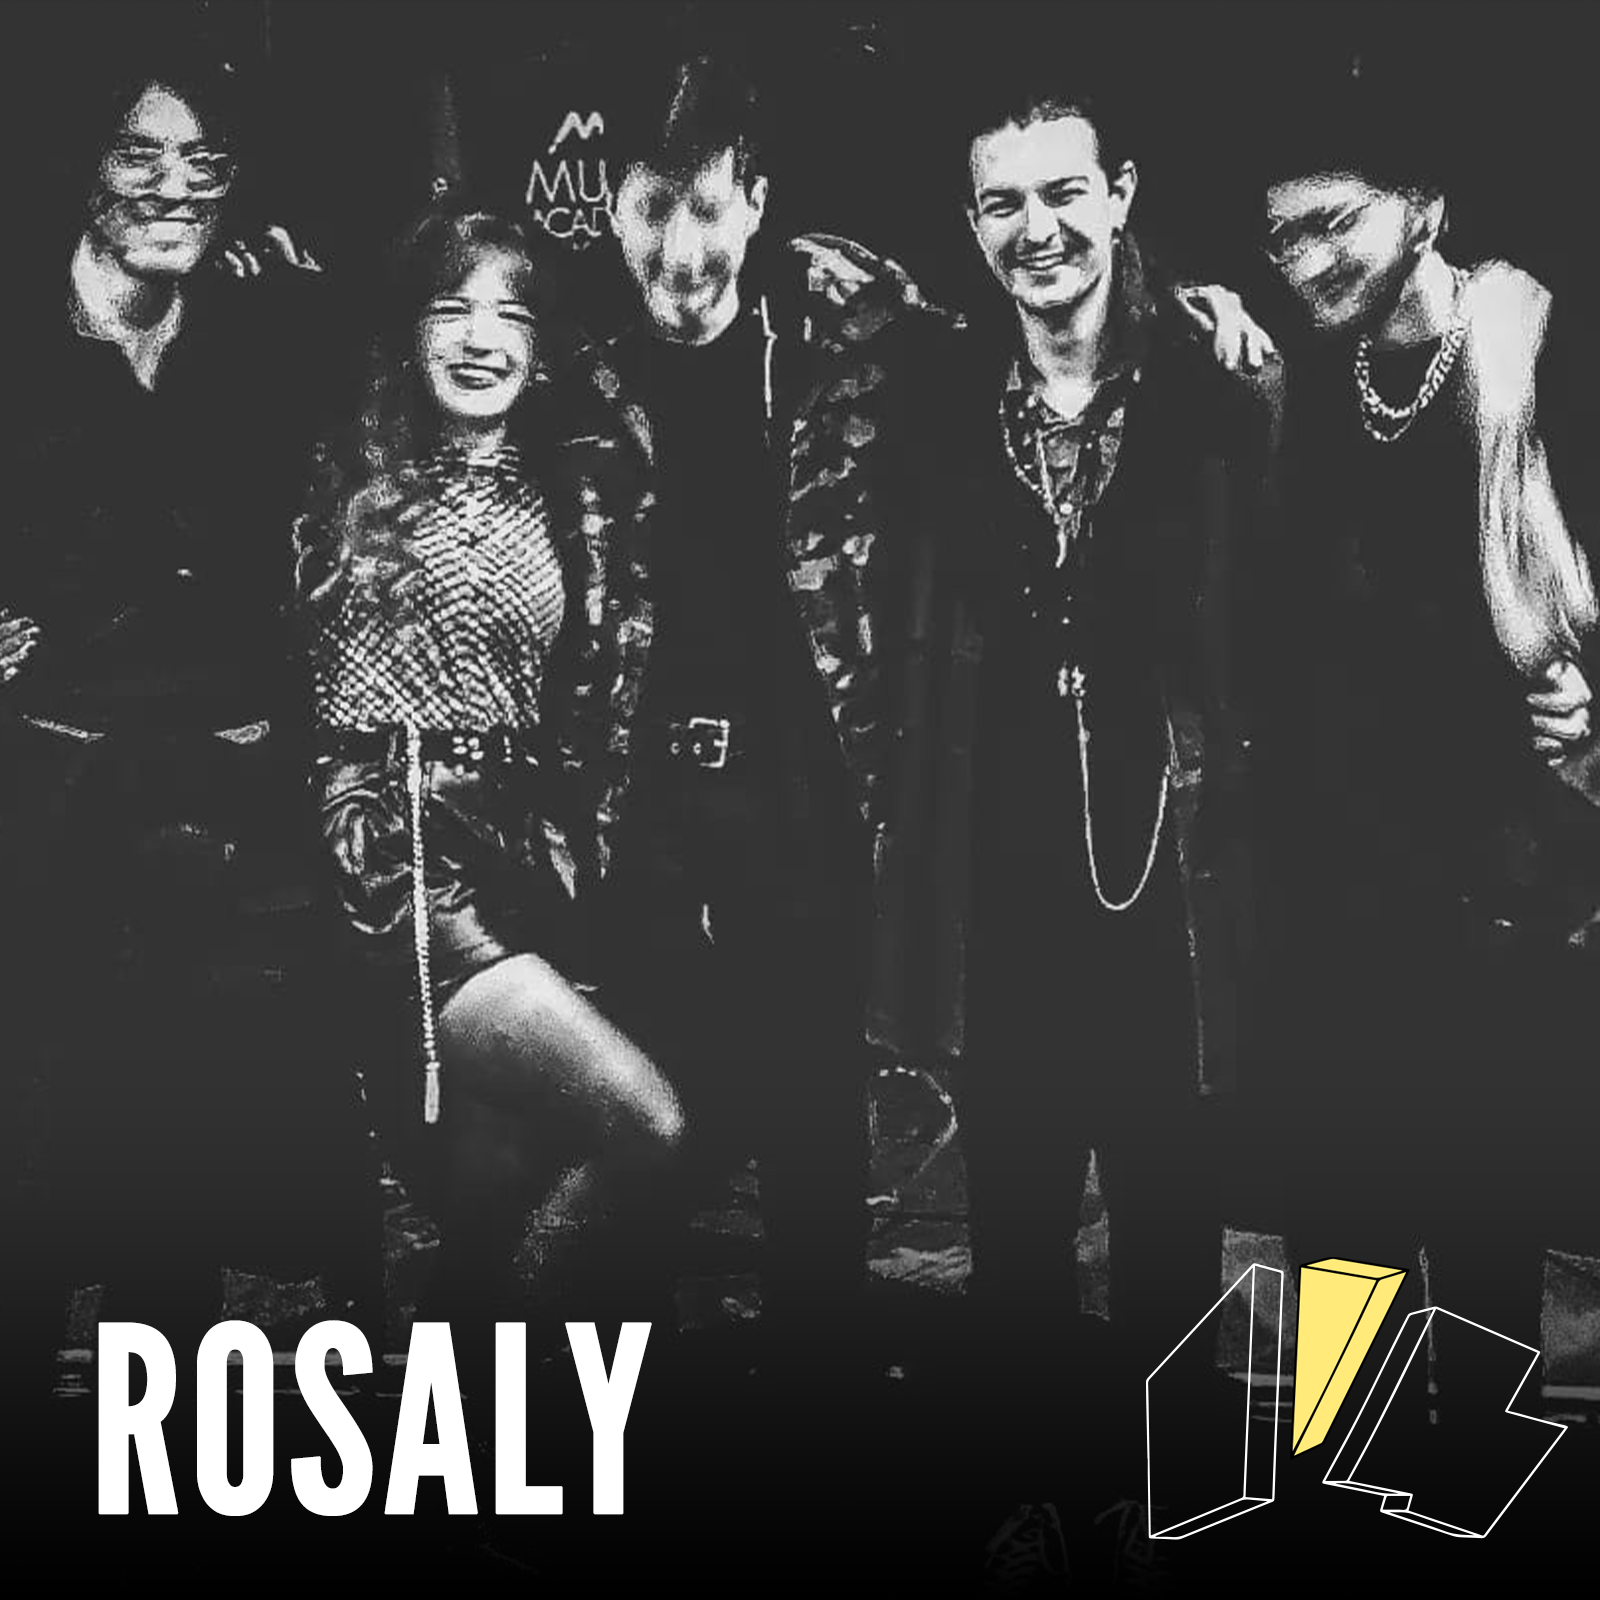 Le groupe Rosaly